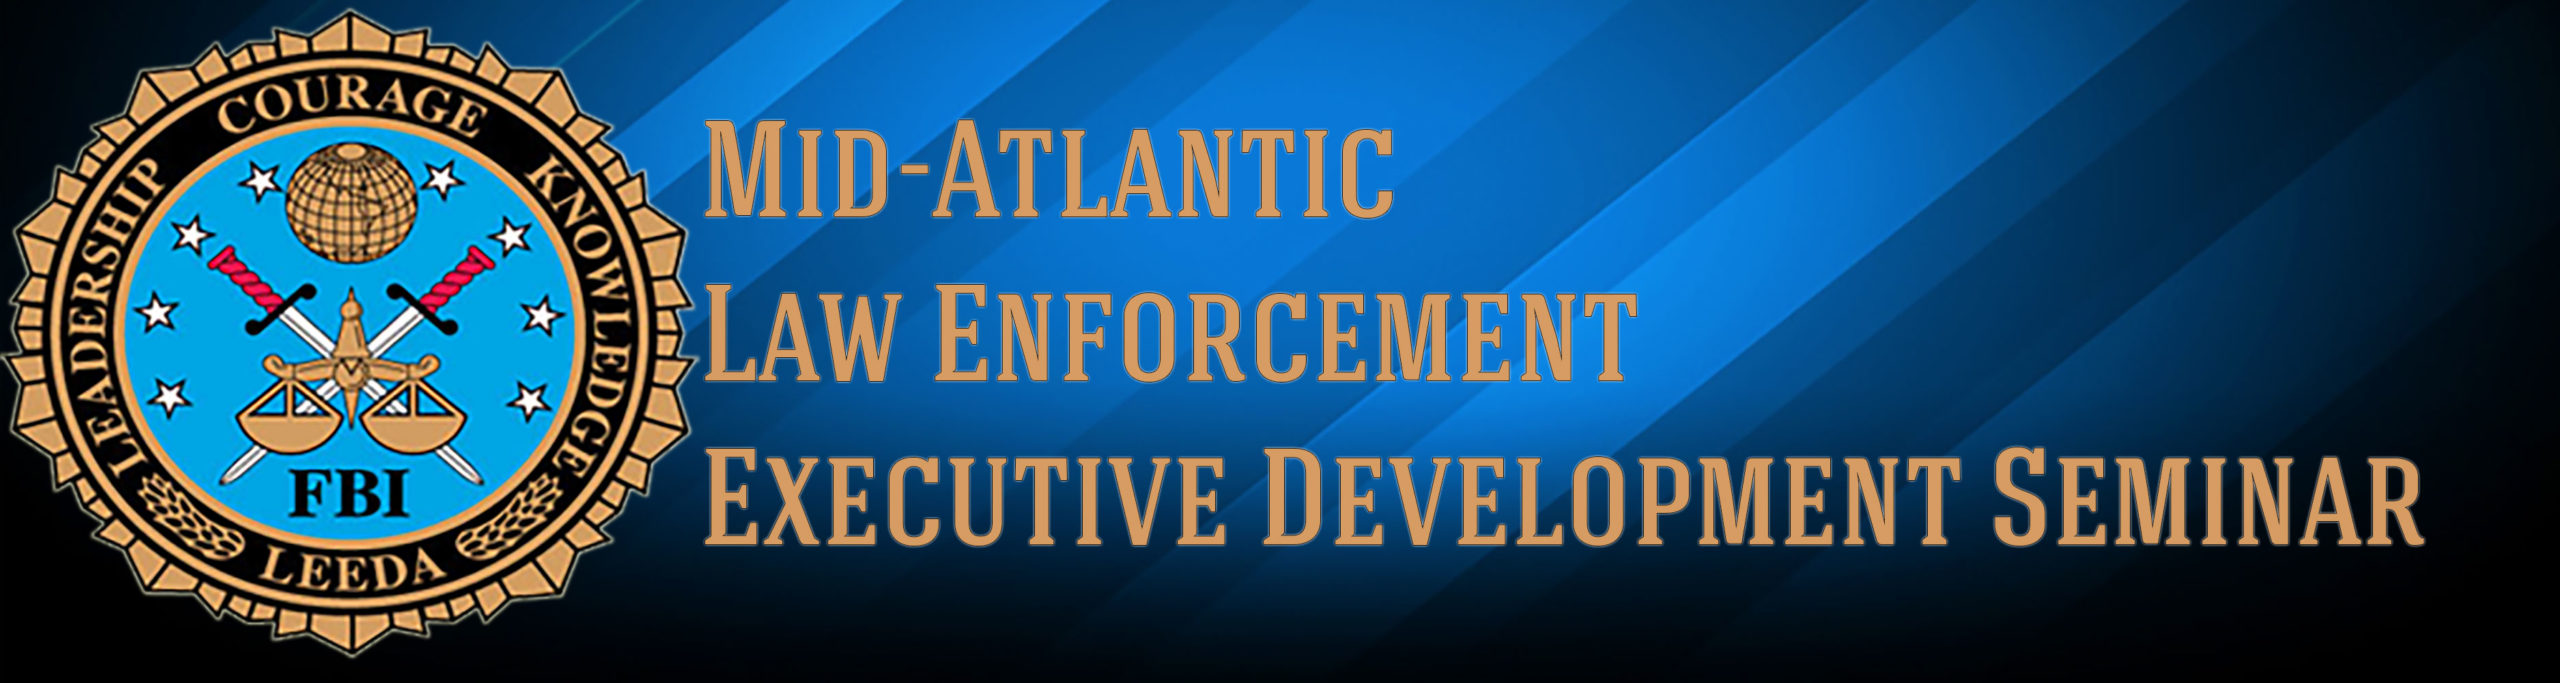 Mid-Atlantic Law Enforcement Executive Development Seminar